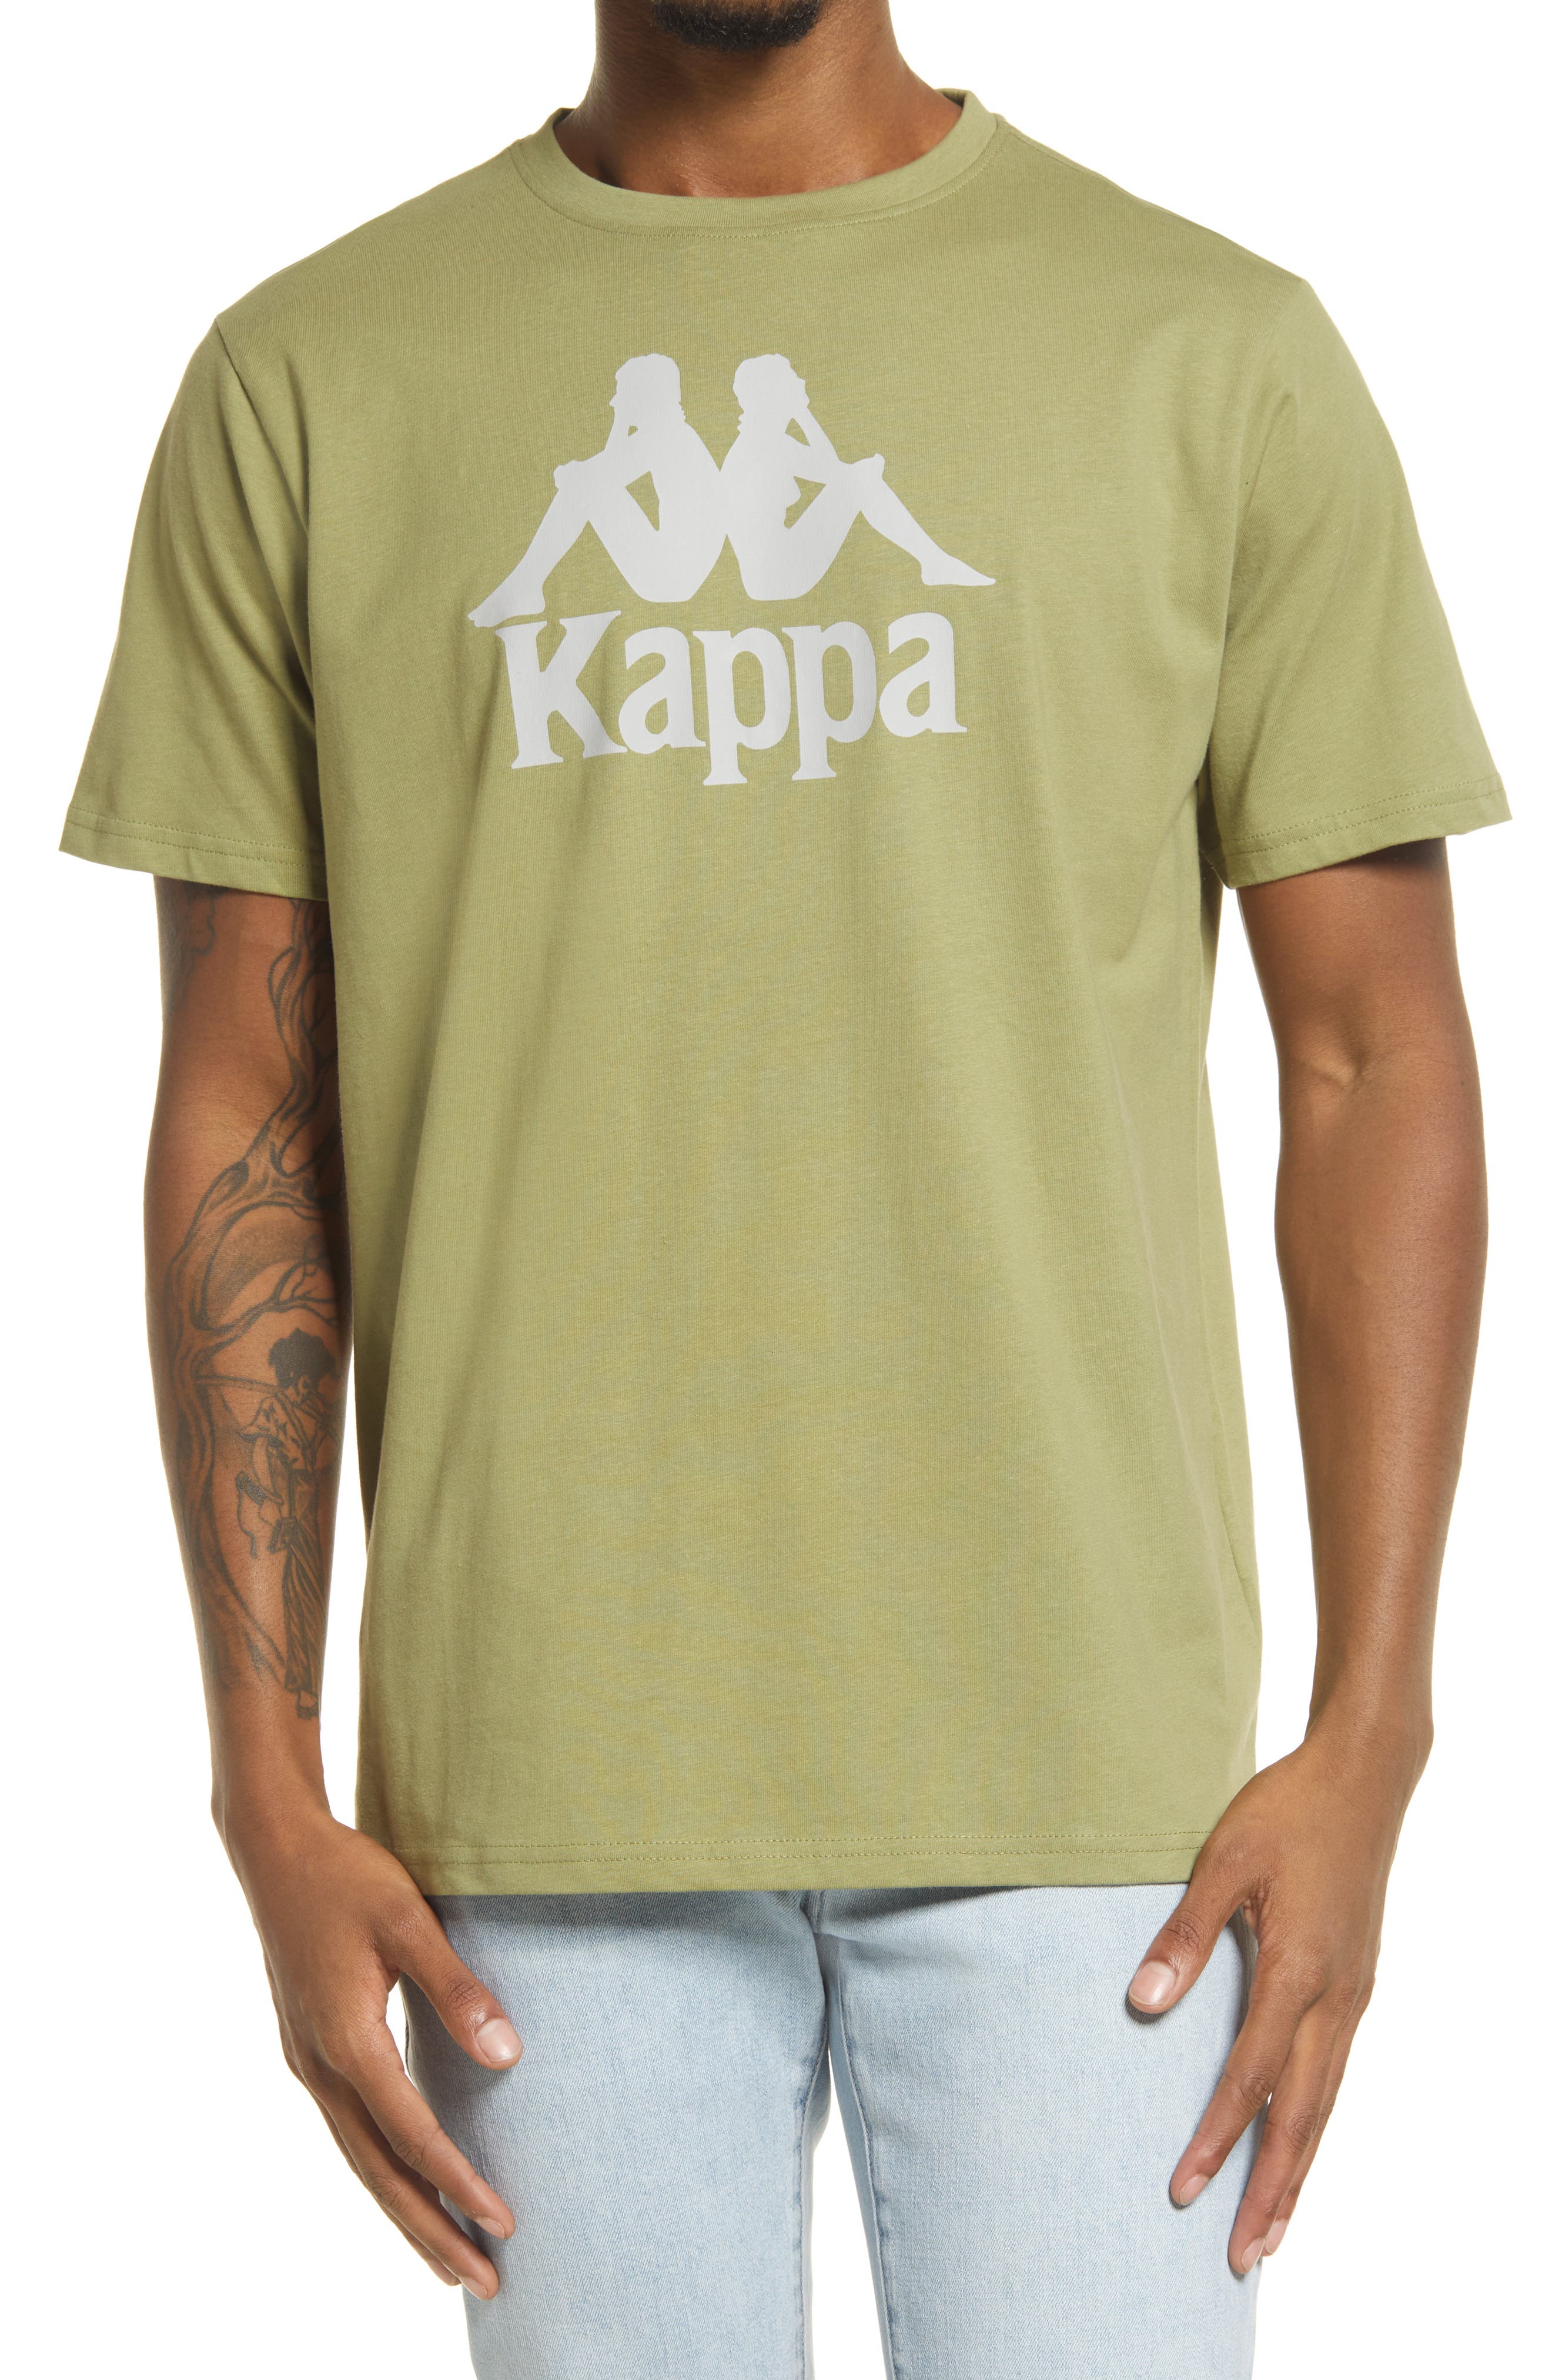 Kappa Authentic Estessi Logo Graphic Tee in Green Saliva-Grey at Nordstrom, Size Medium